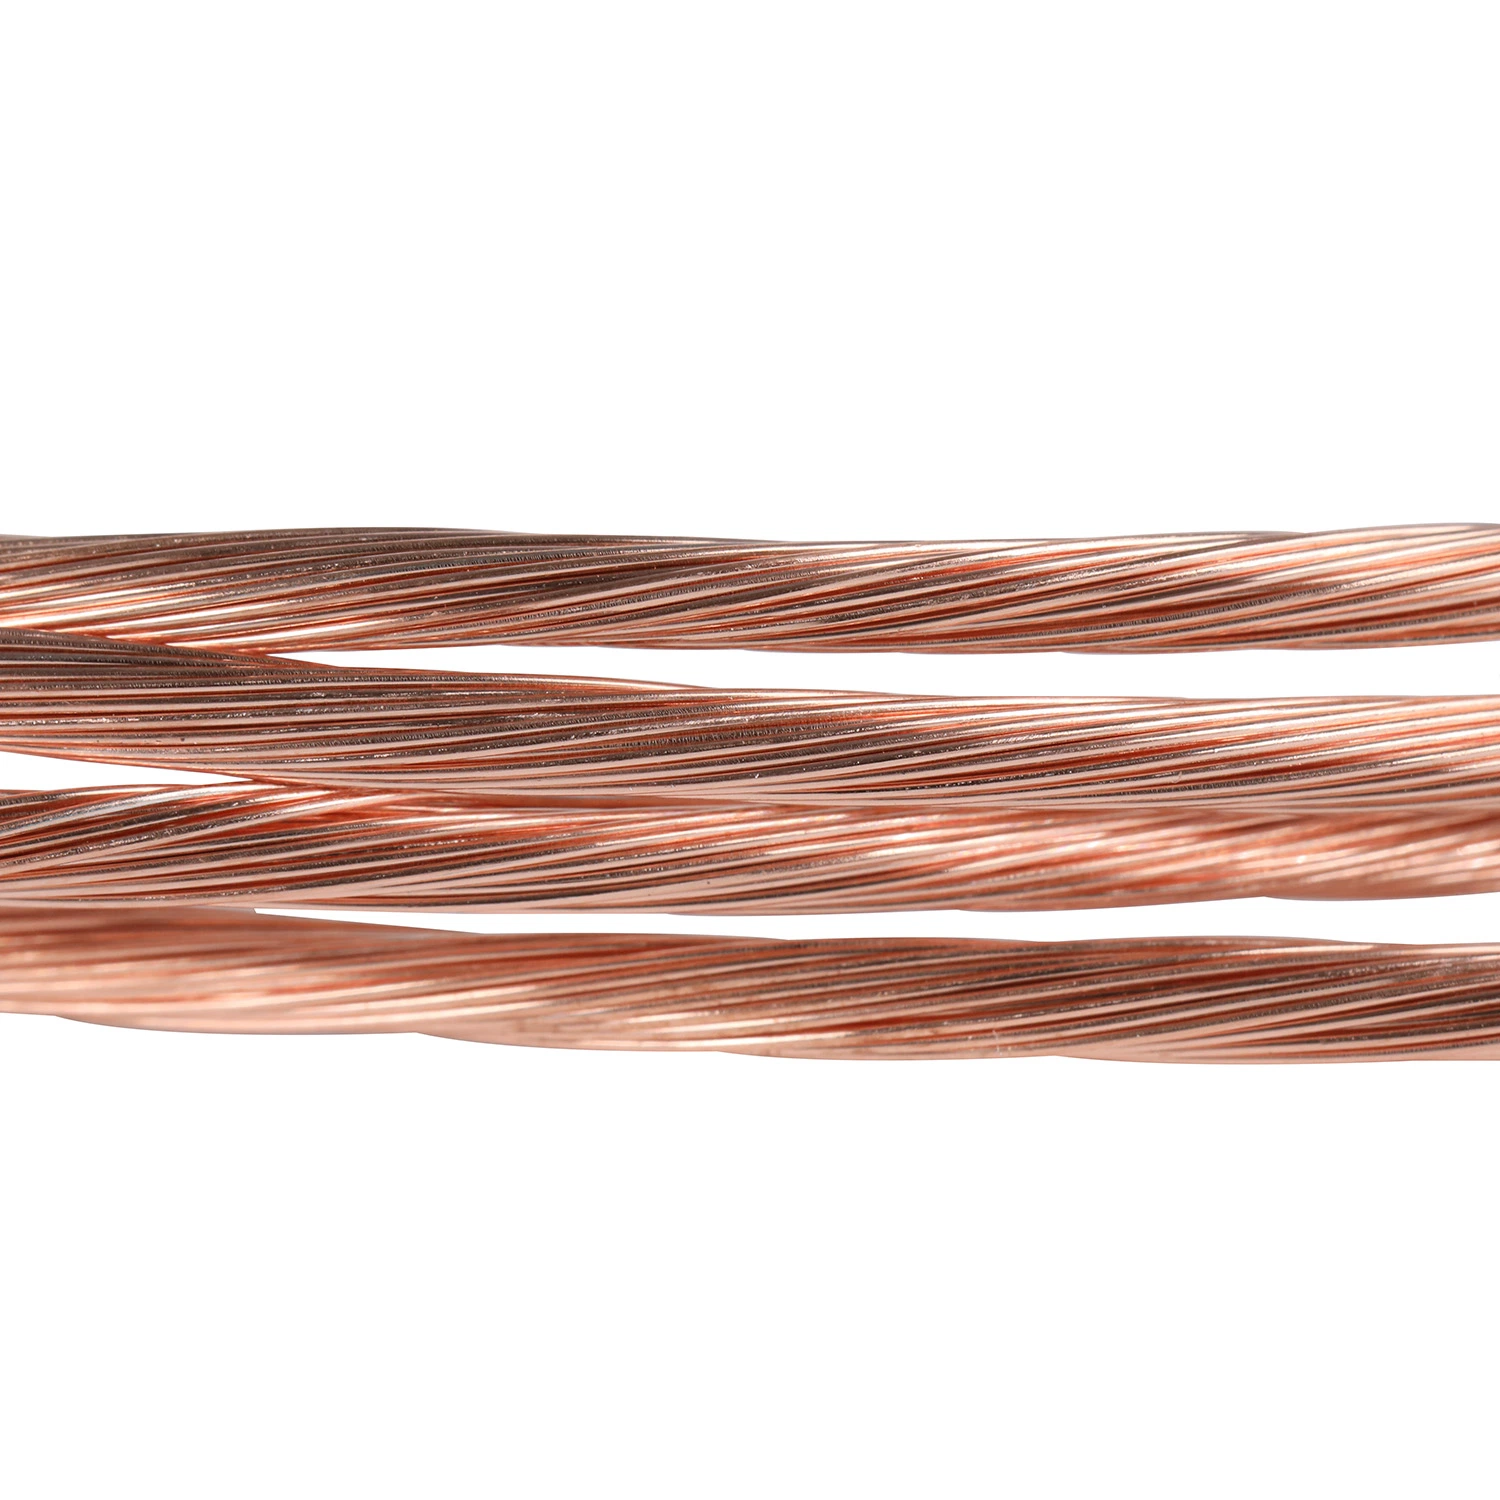 Gelei Cables Super Flexible CCA Copper Clad Aluminum Stranded Wire